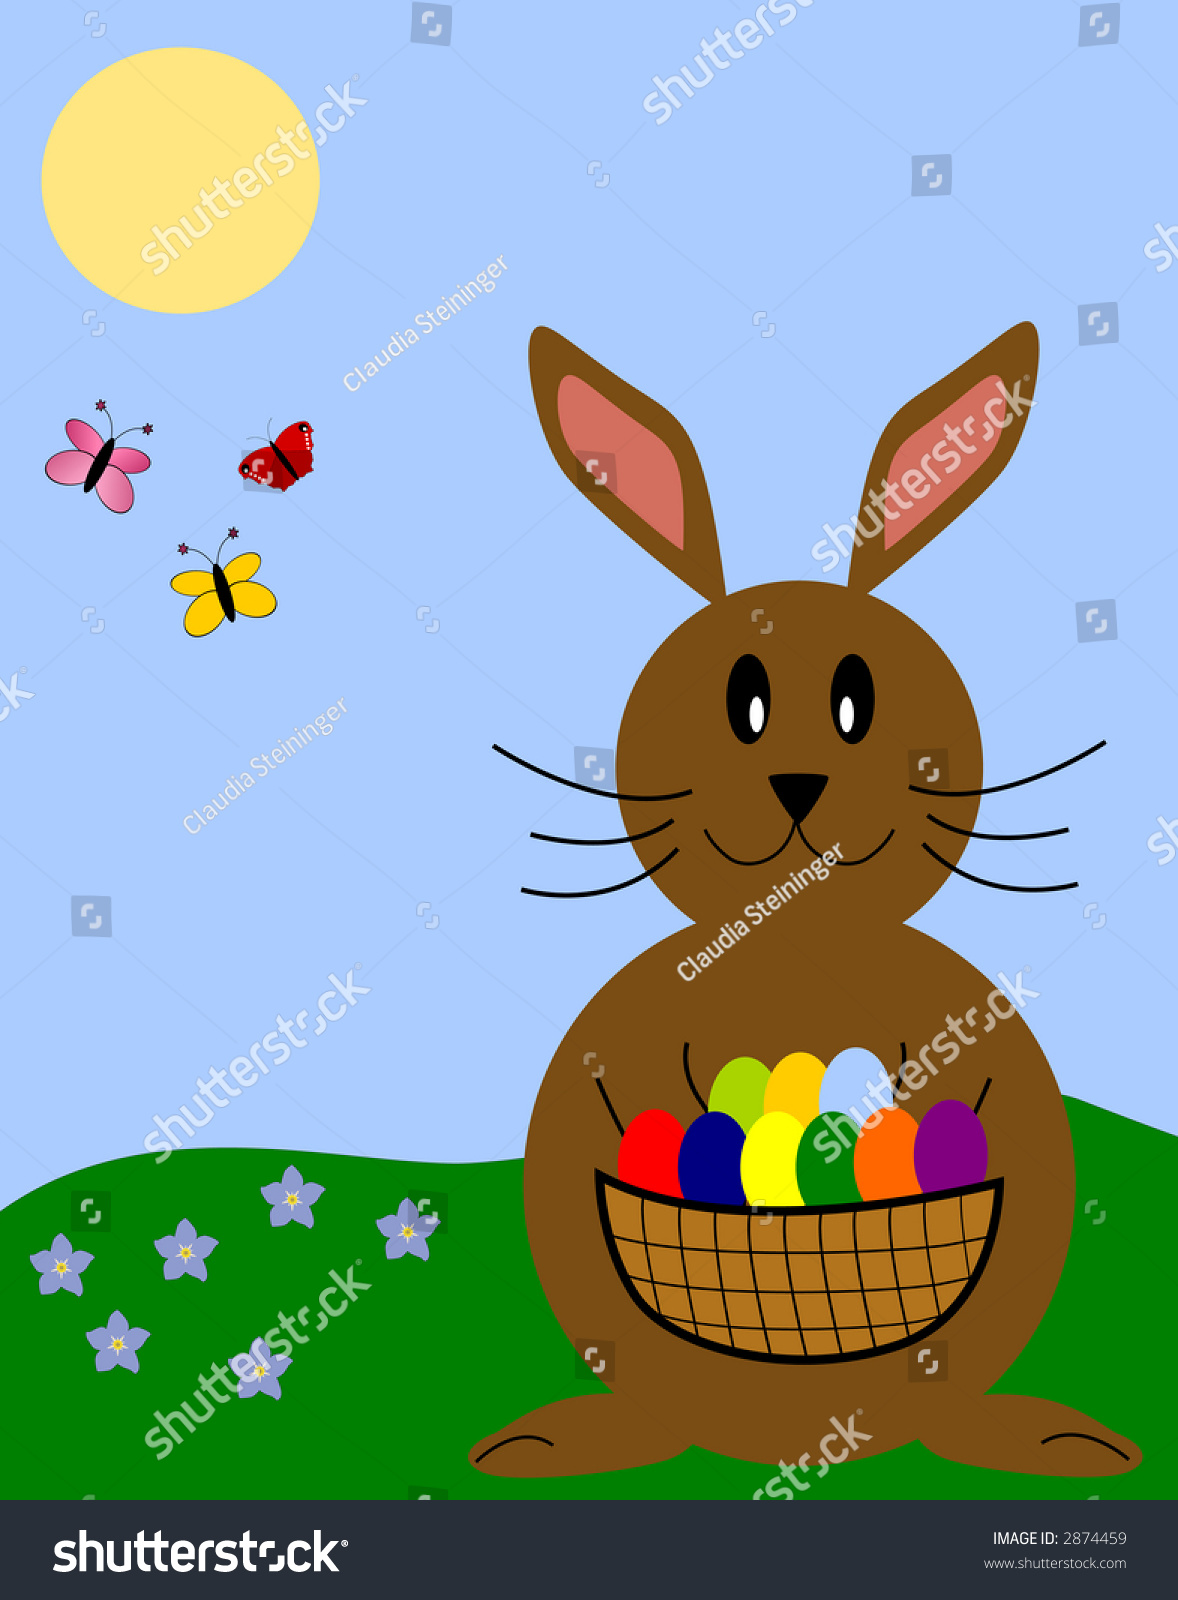 Easter Bunny (Vector) - 2874459 : Shutterstock